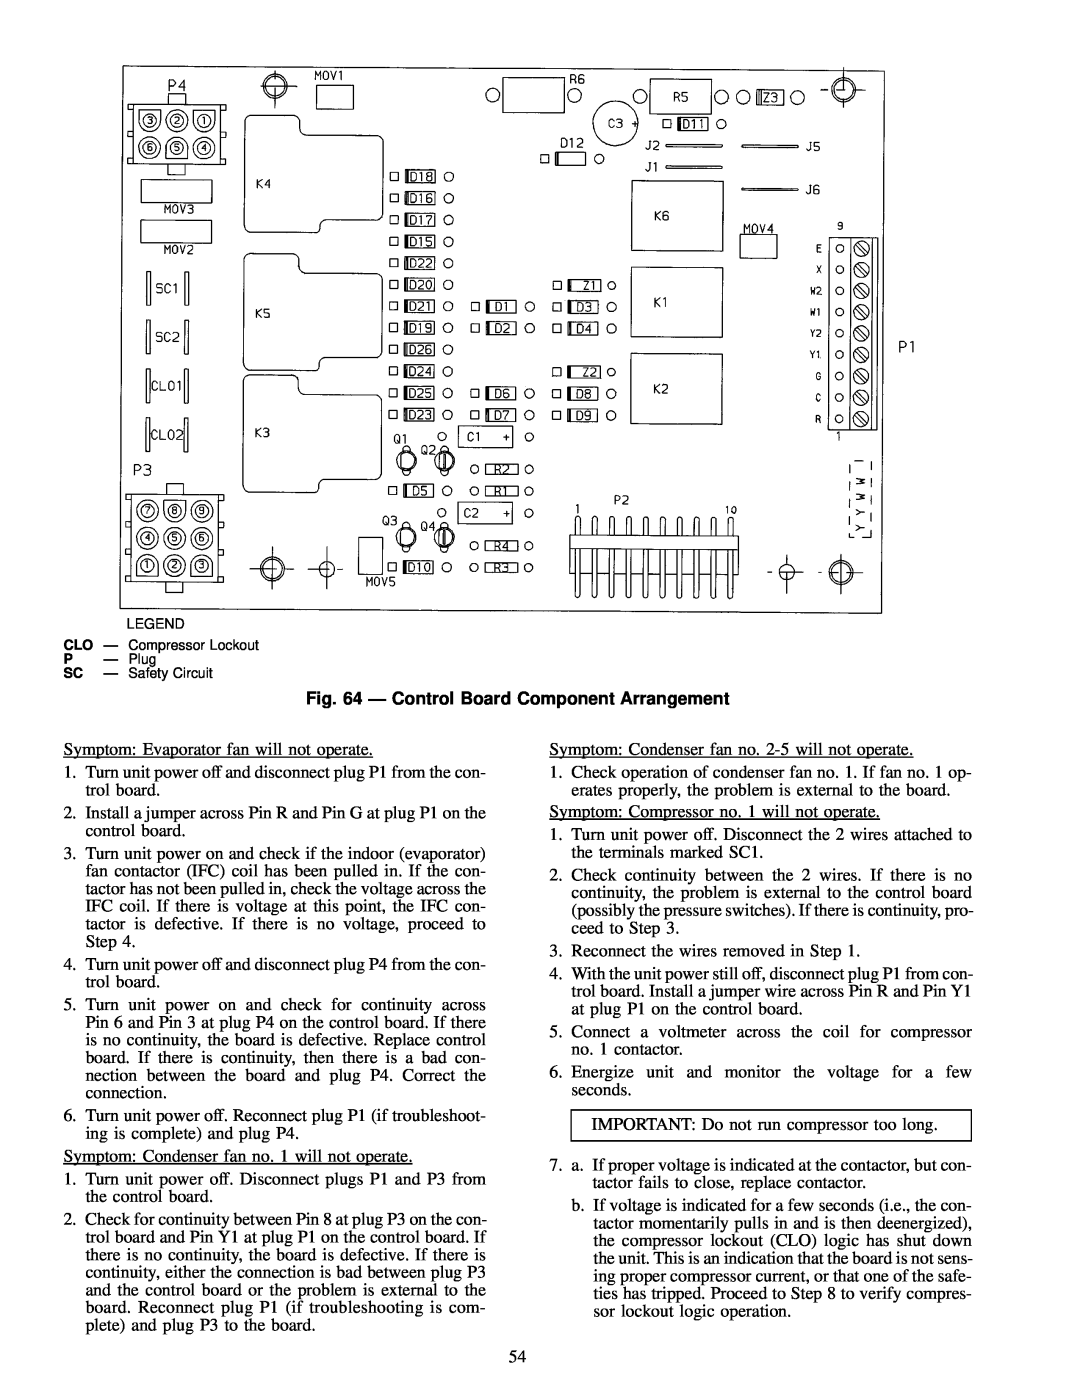 Carrier NP034-074 specifications Ð Control Board Component Arrangement 